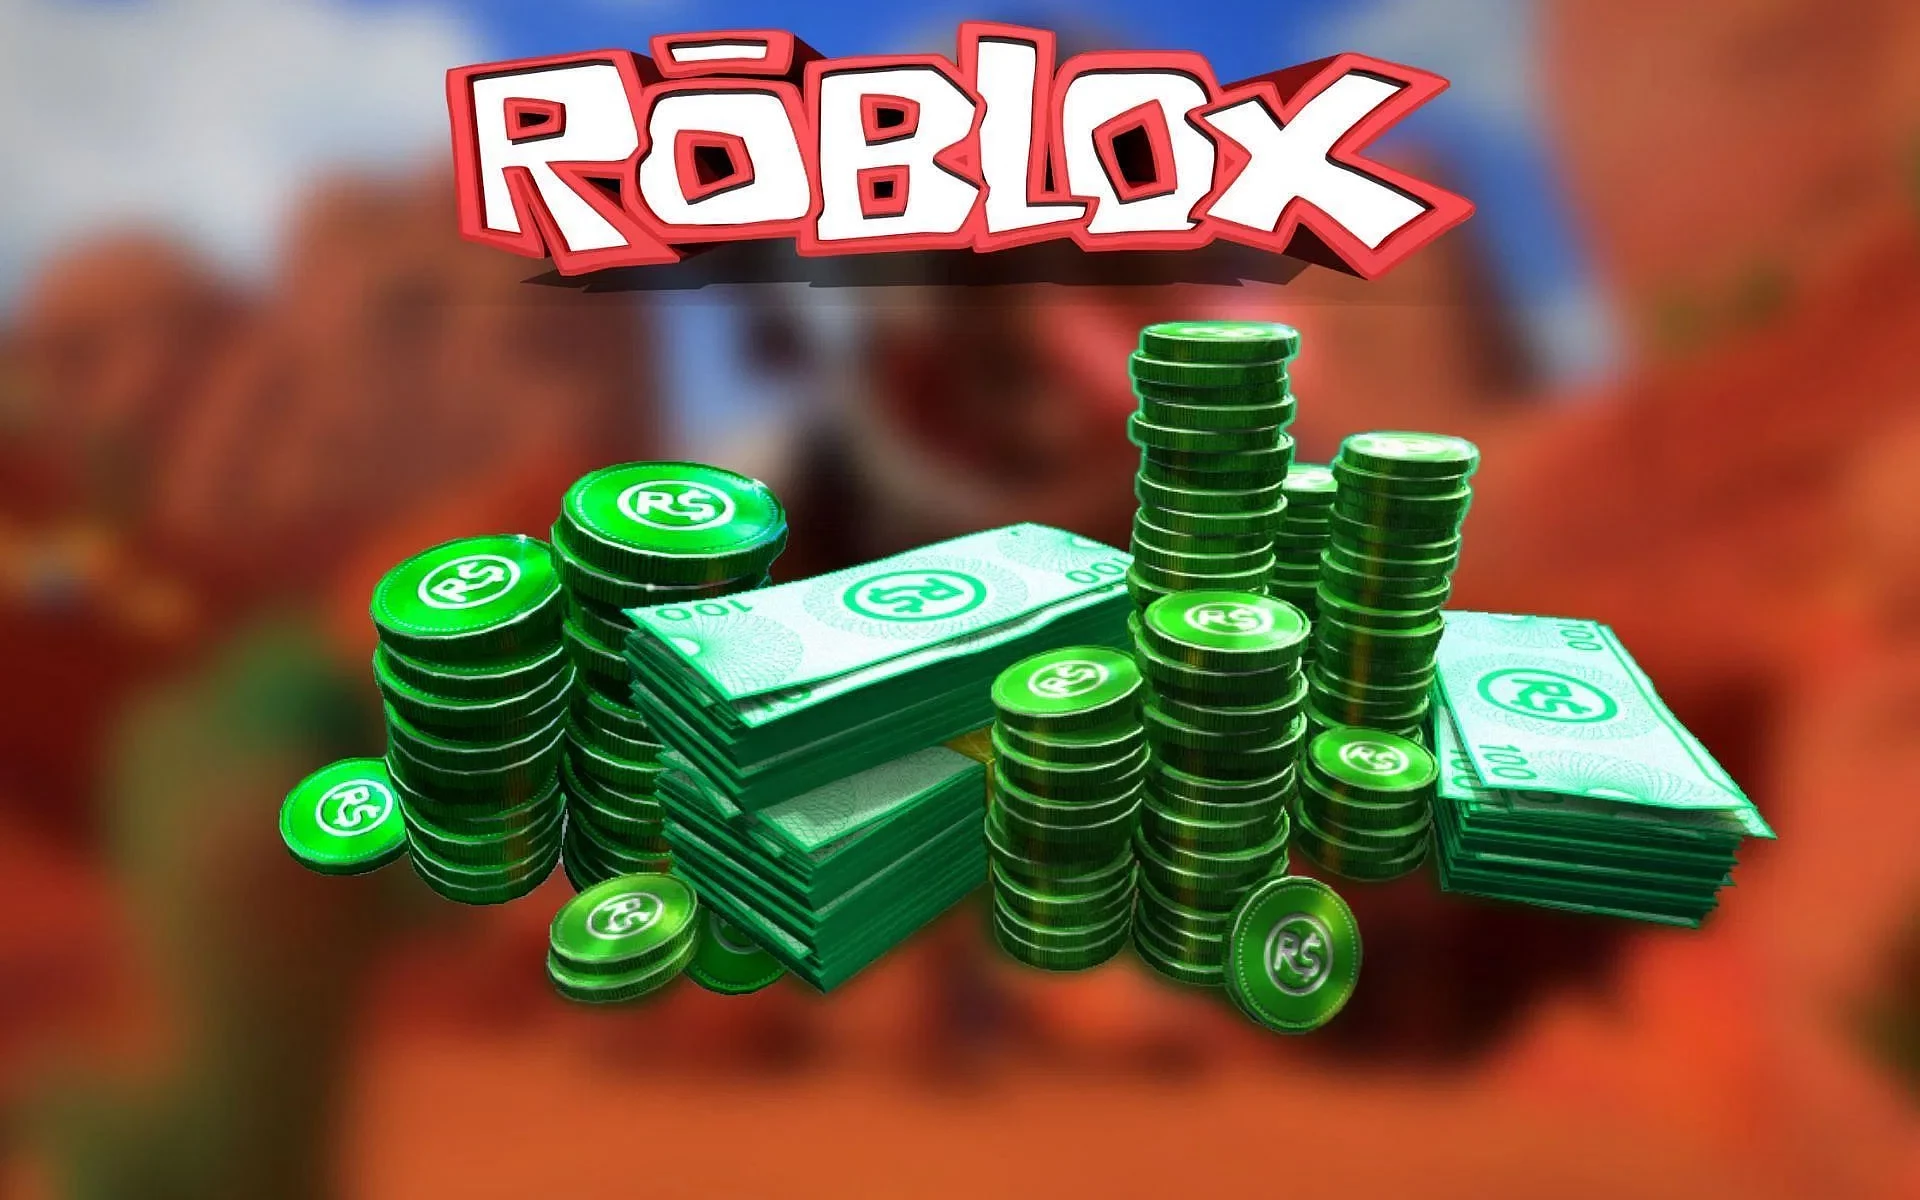 Roblox Robux dollars